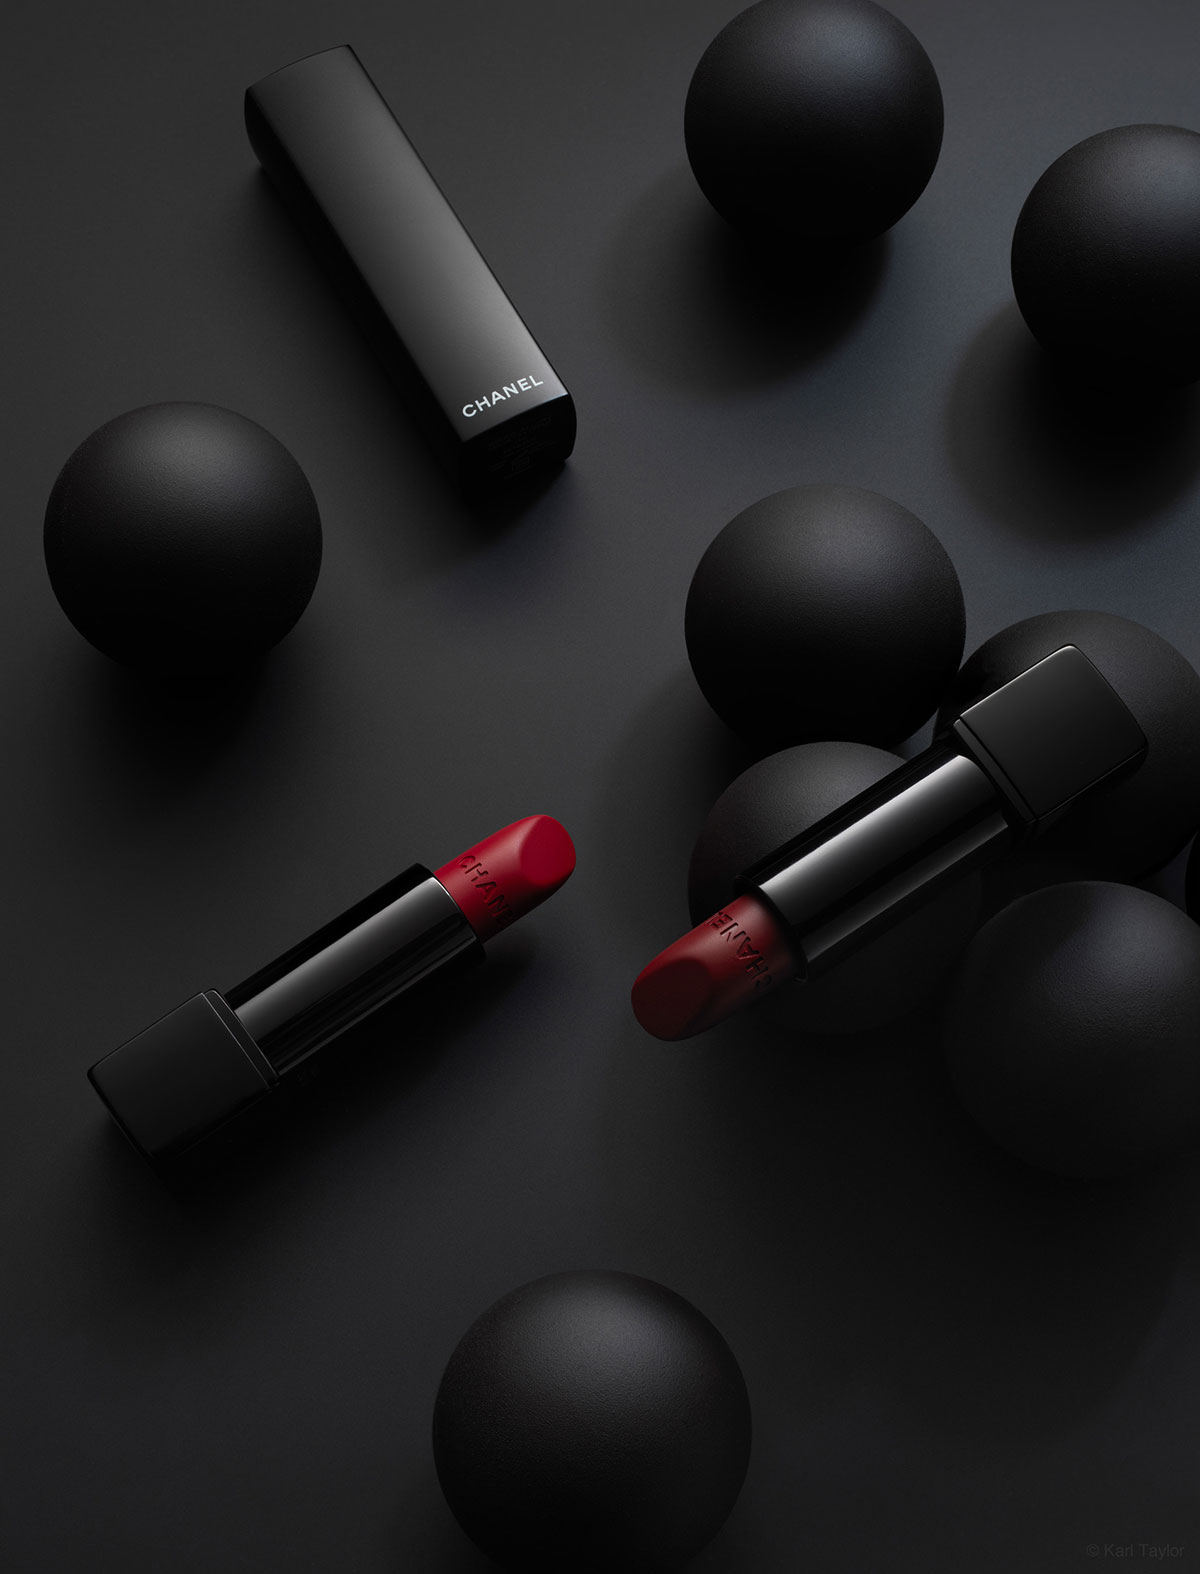 Chanel lipsticks by Karl Taylor